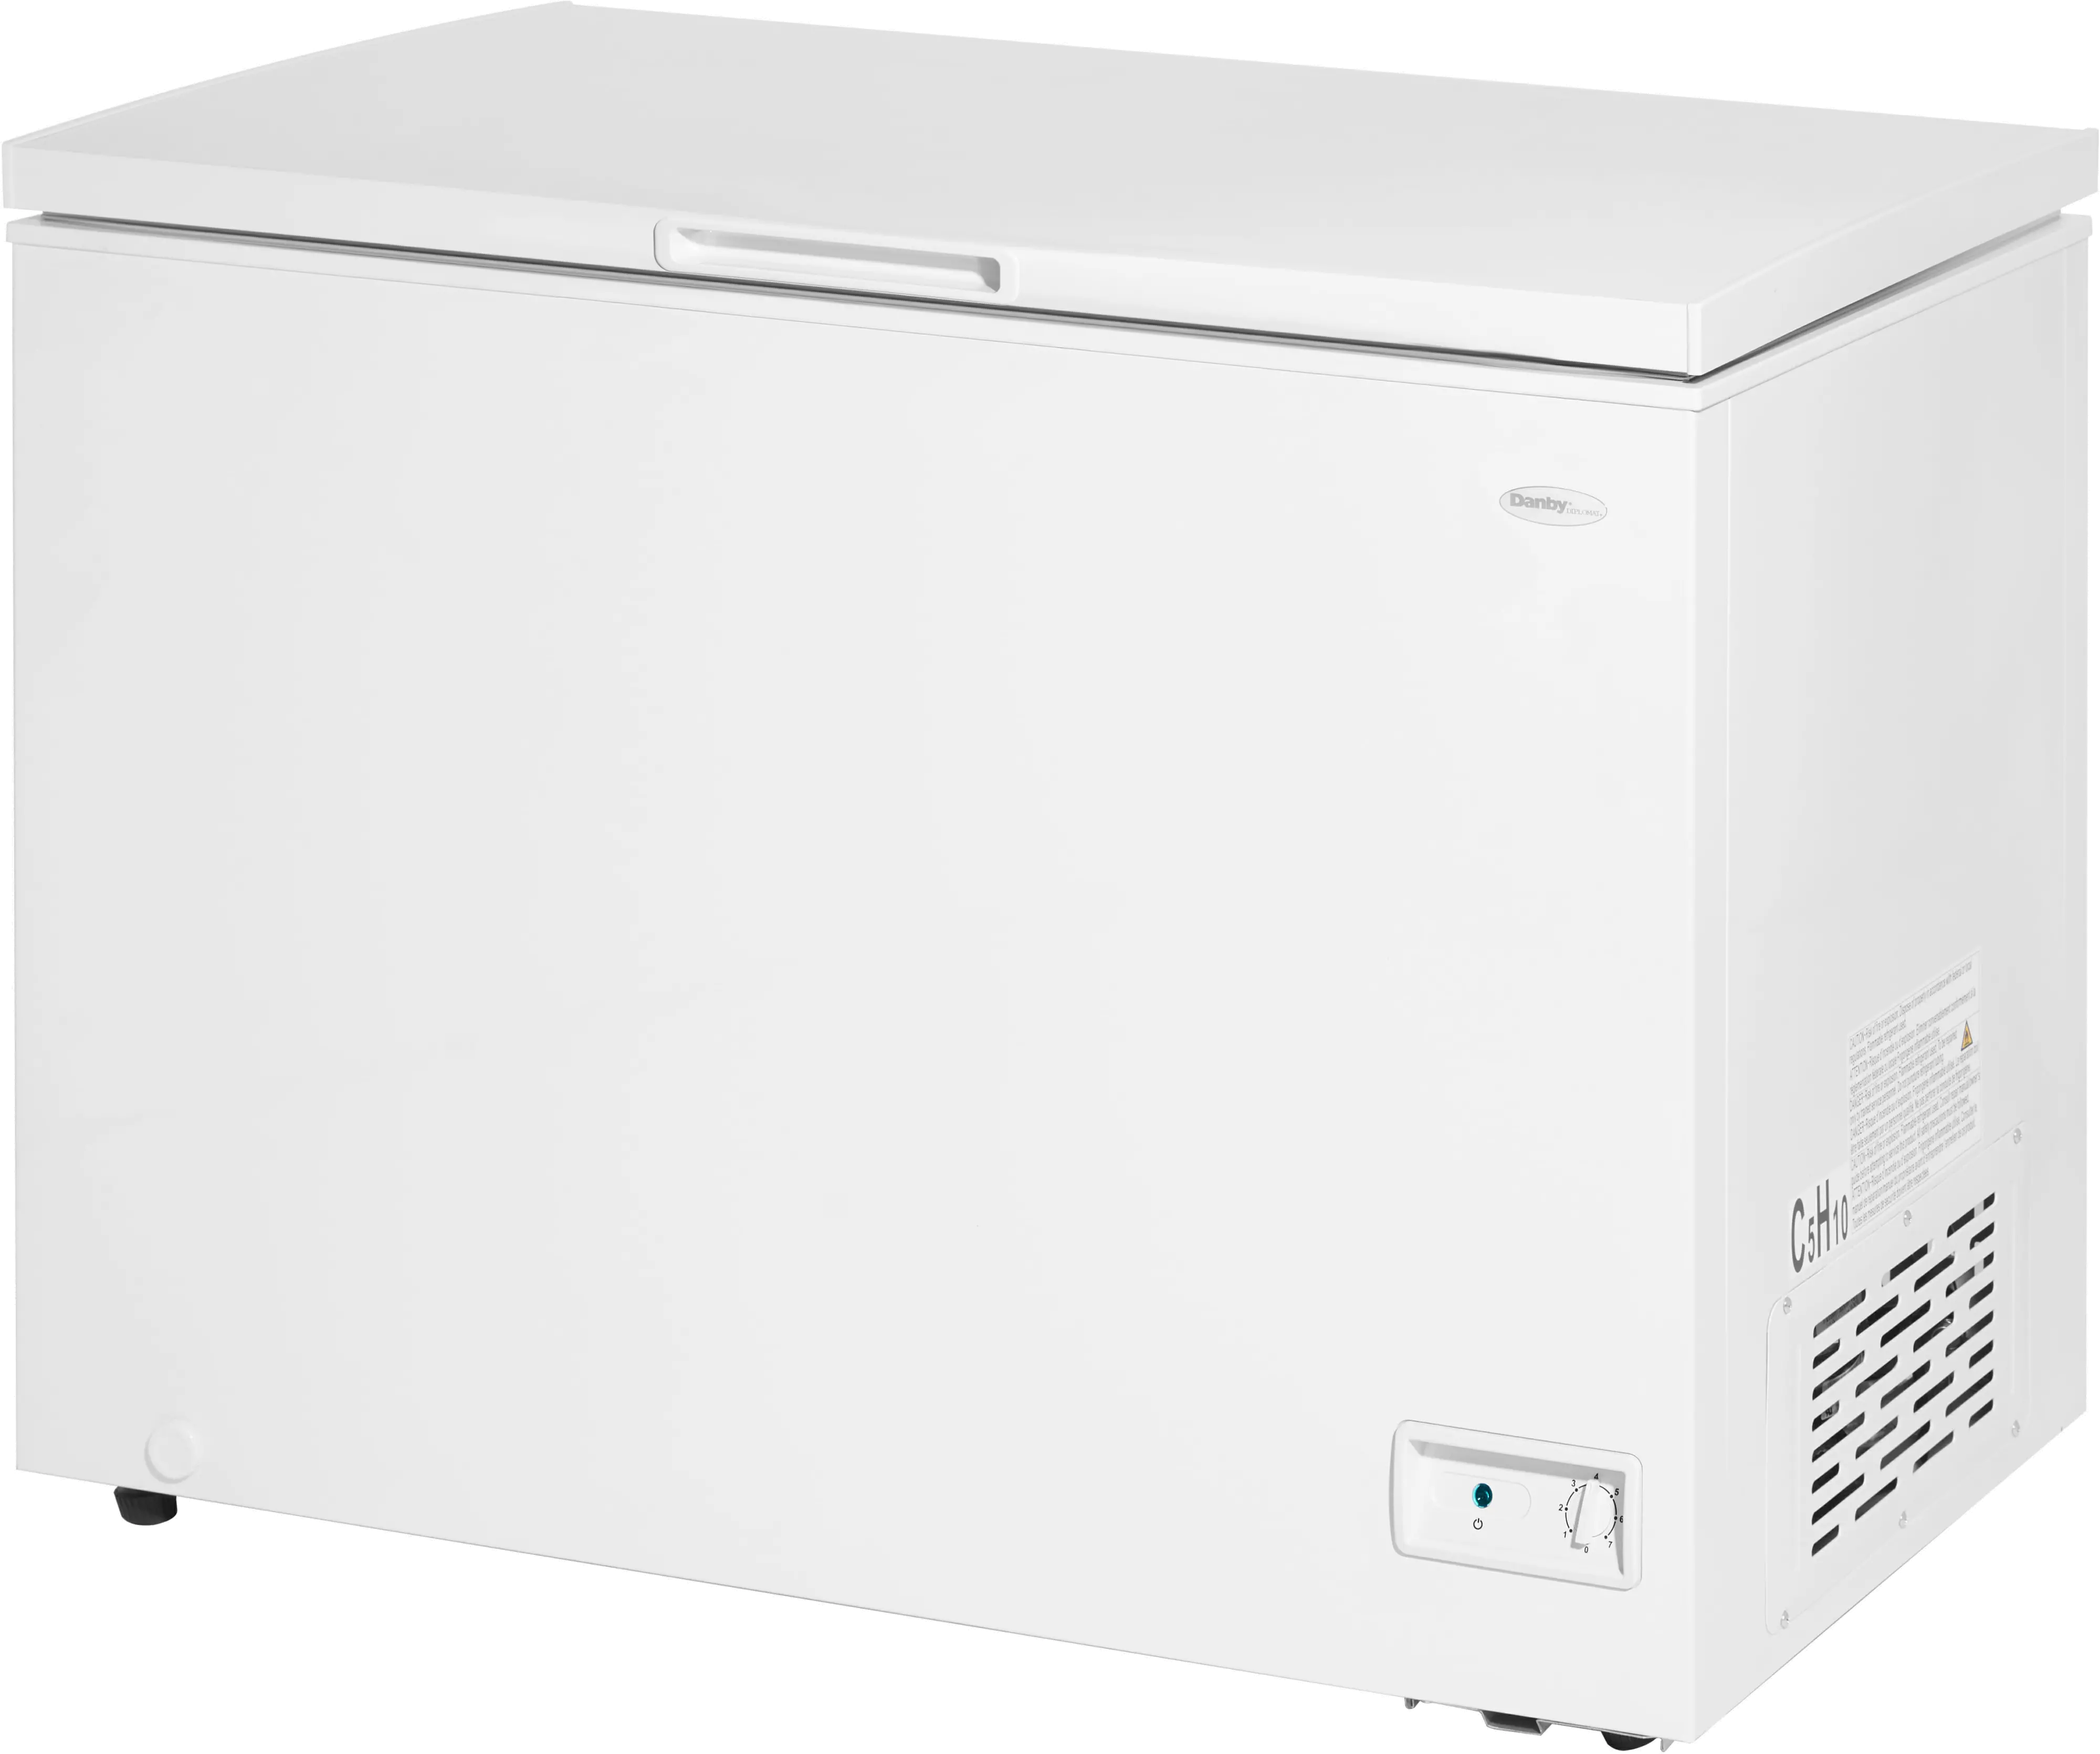 Danby 10 Cu. Ft. Chest Freezer in White - DCF100A6WM